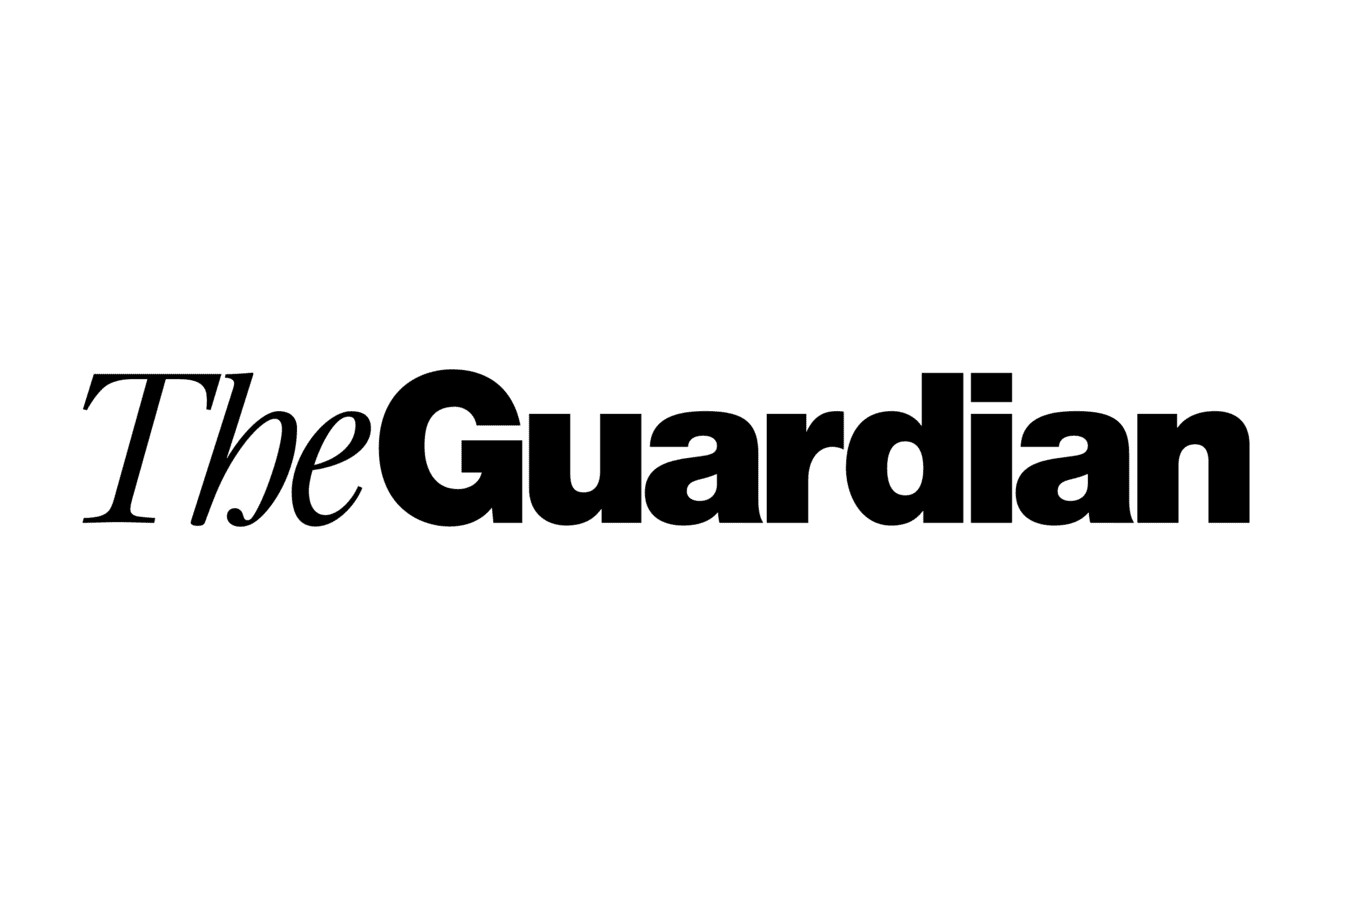 The_Guardian_logo_PNG2